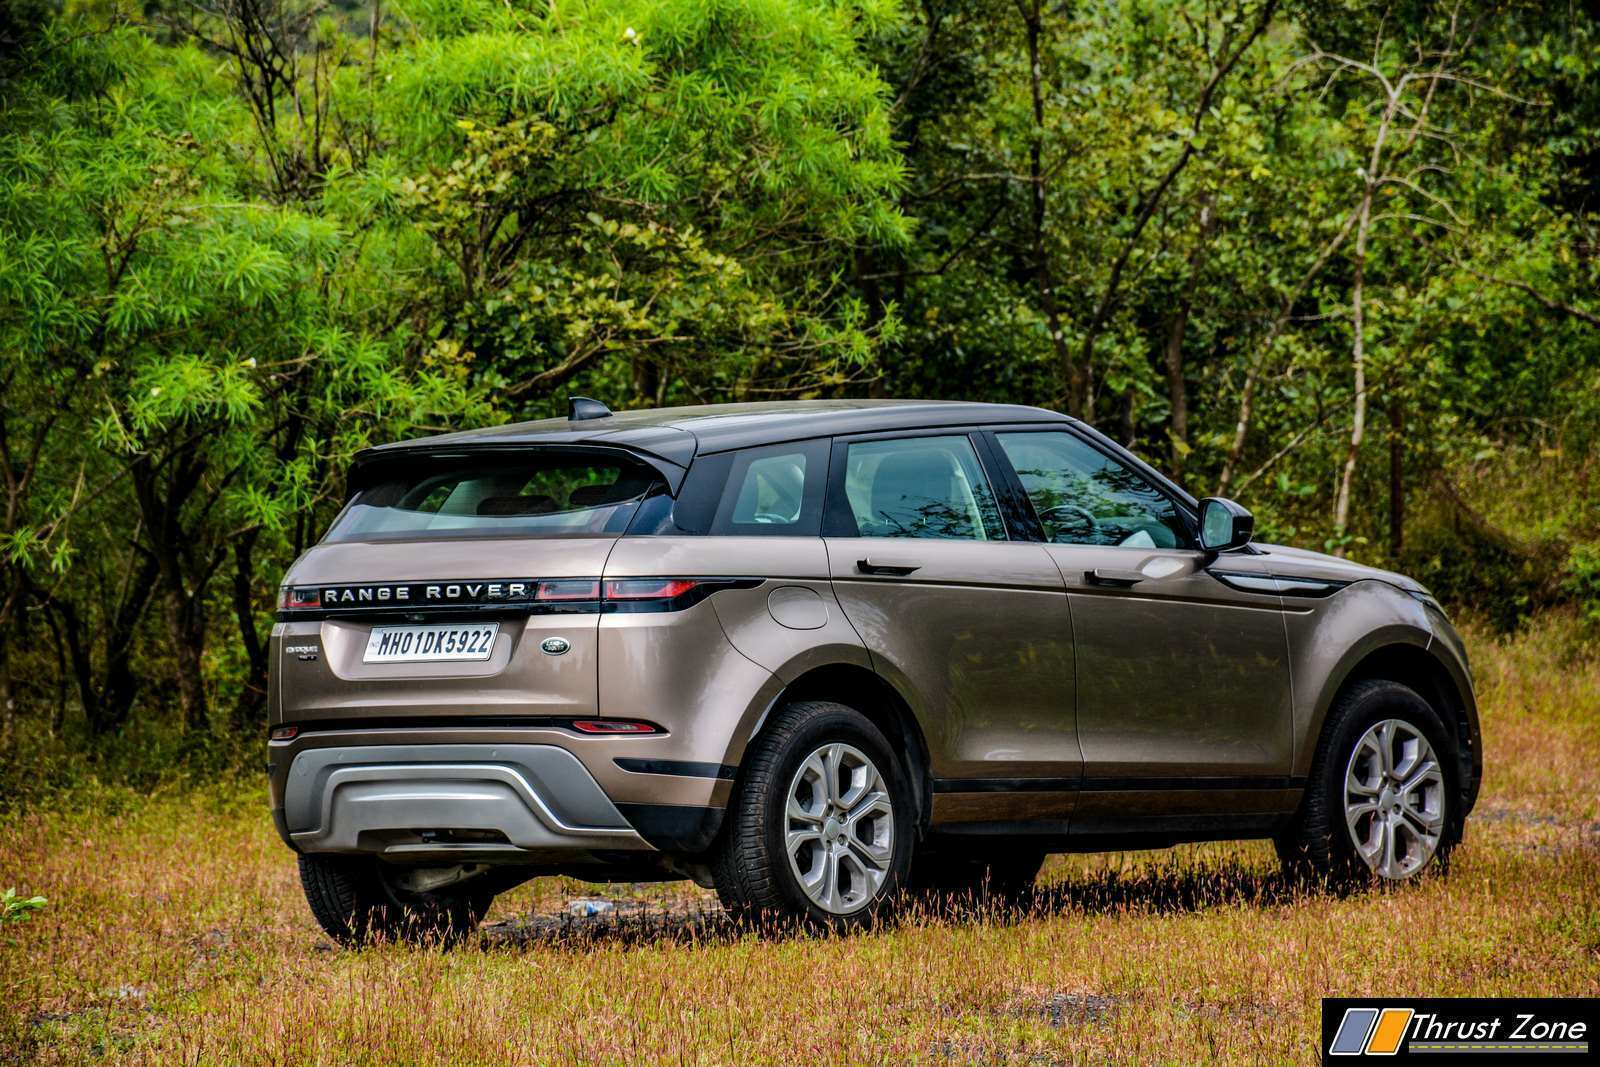 2020-Range-Rover-Evoque-Diesel-India-Review-5